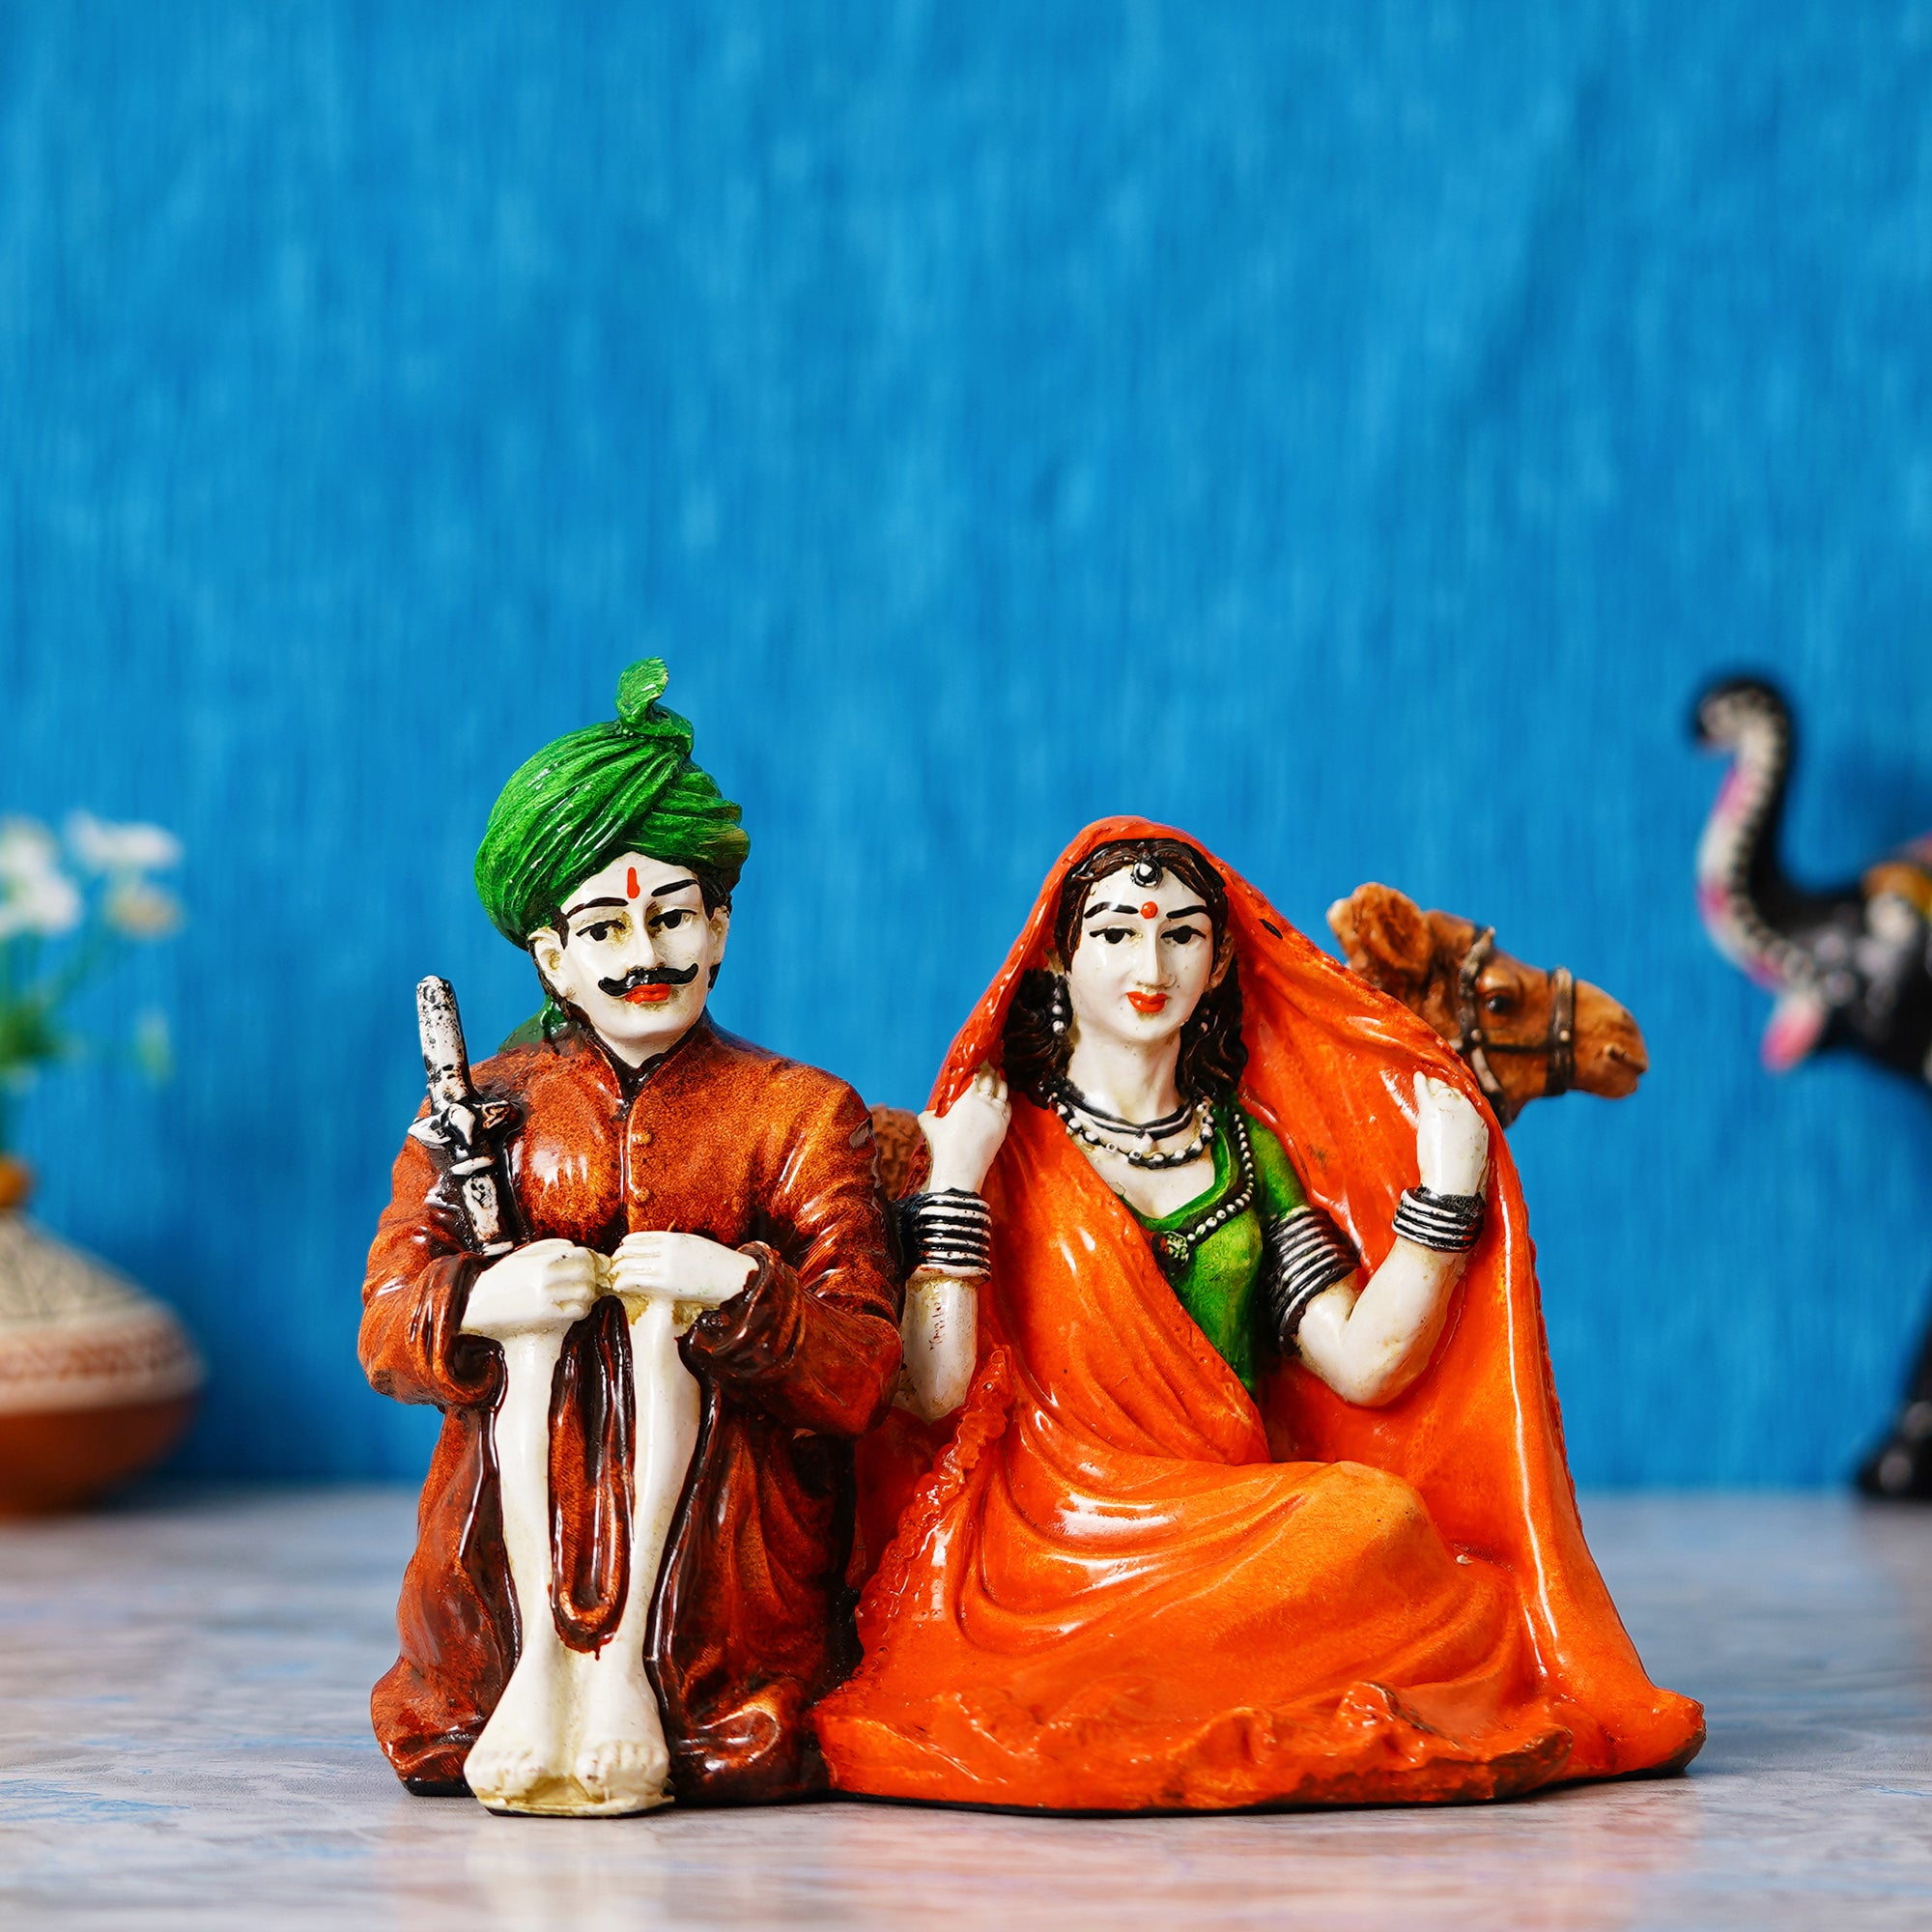 Combo Of Rajasthani Couple Sitting Together Human Figurines Decorative Showpiece